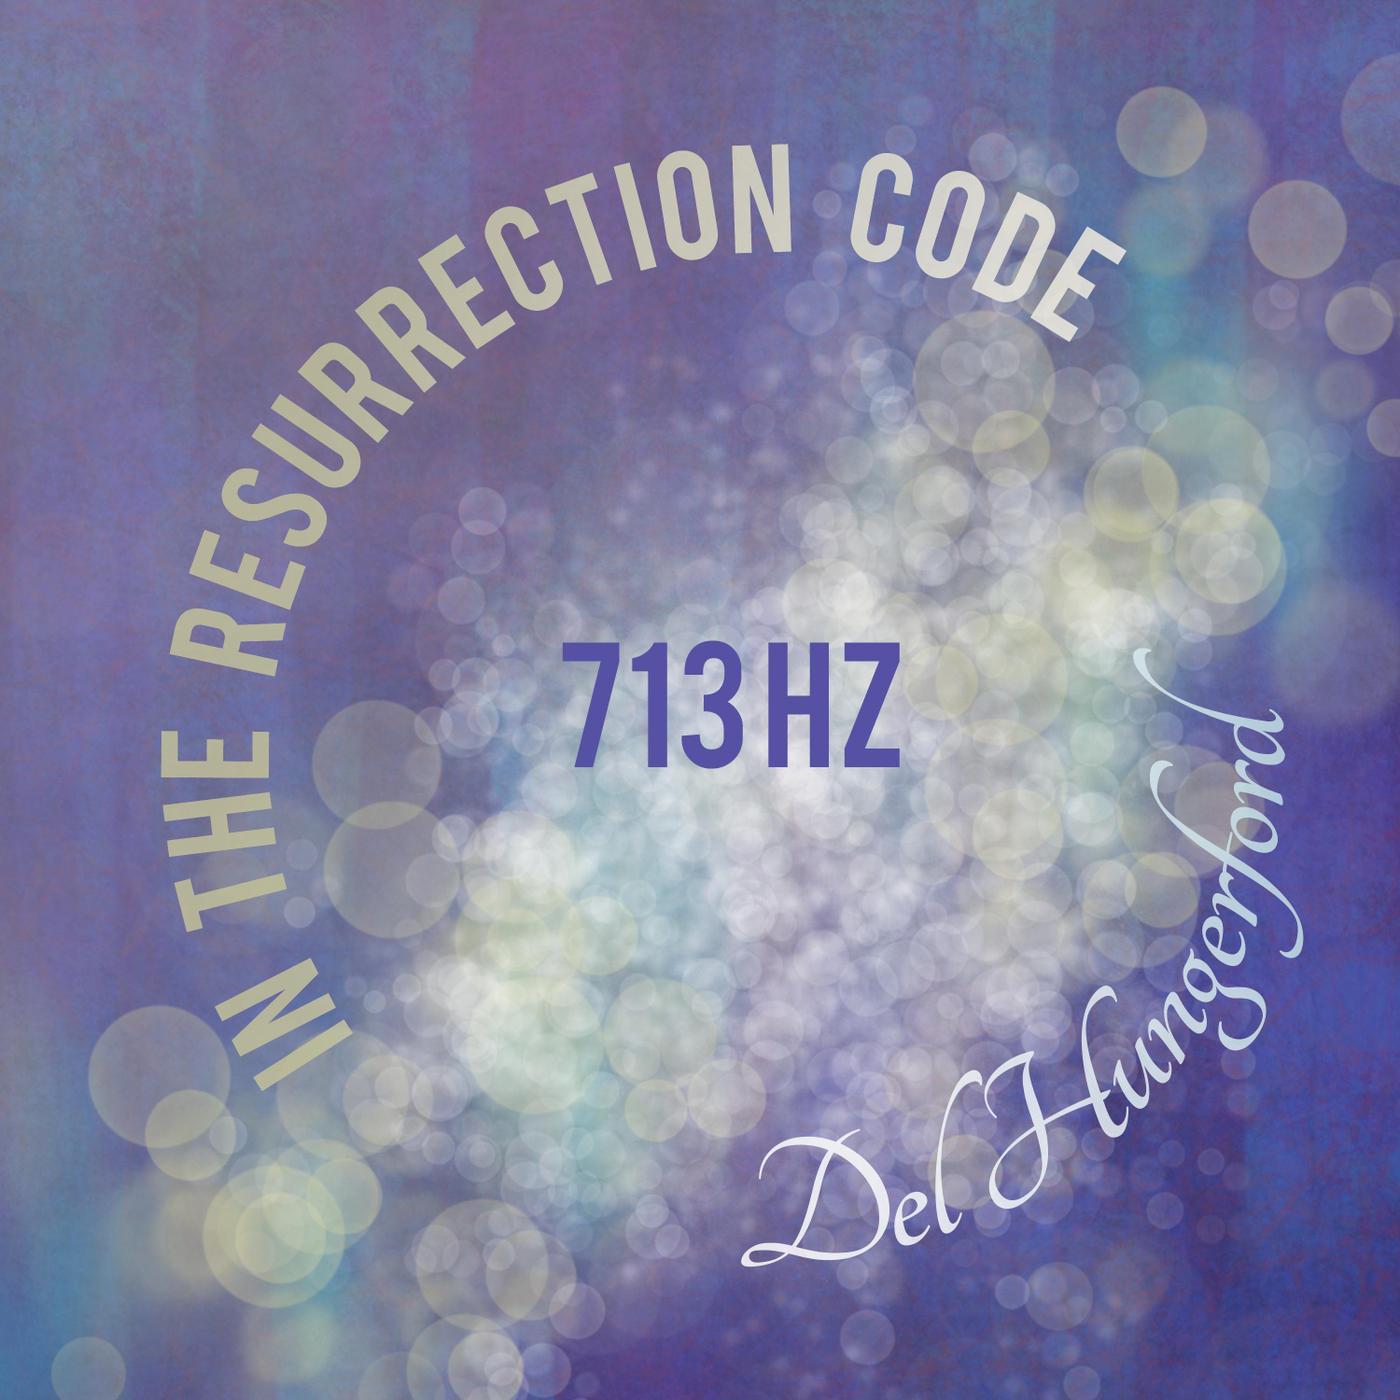 In the Resurrection Code